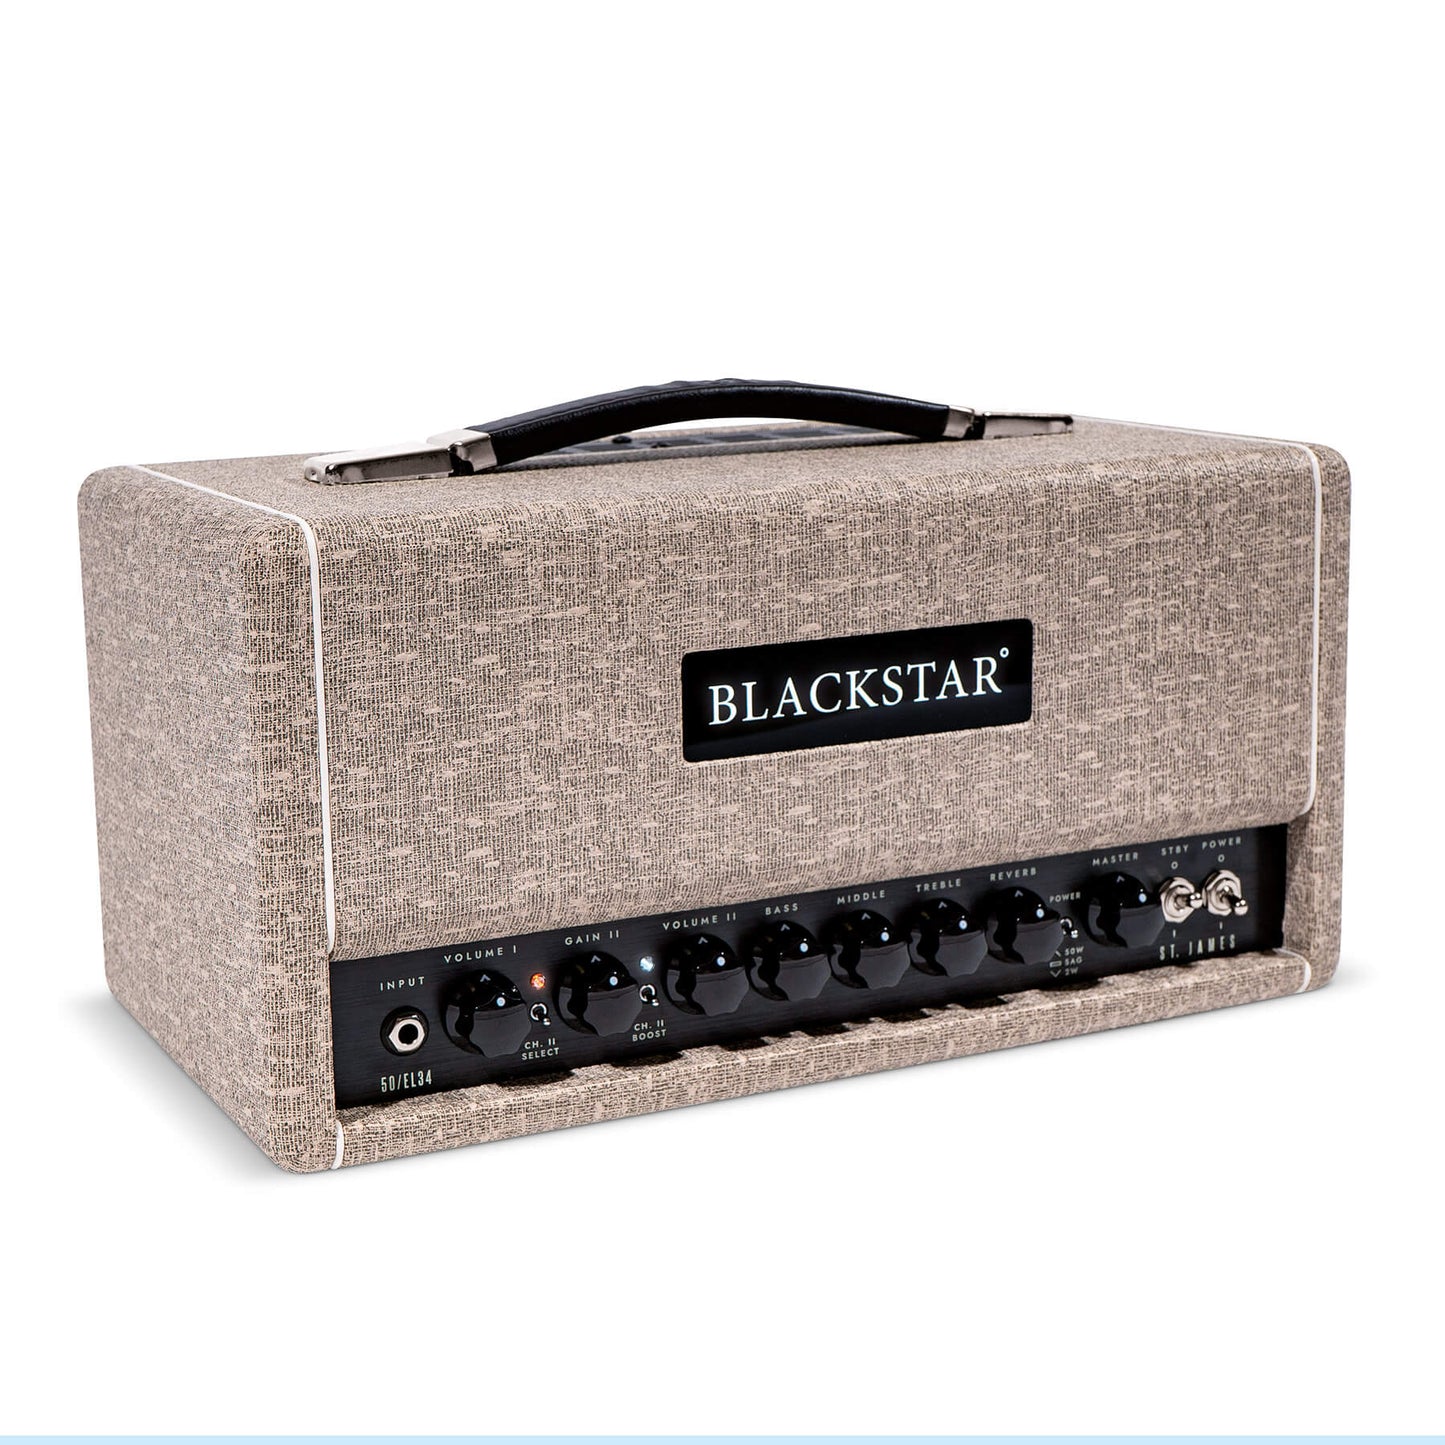 Blackstar ST. JAMES 50 EL34 HEAD Guitar Valve Amplifier - Fawn (Each)